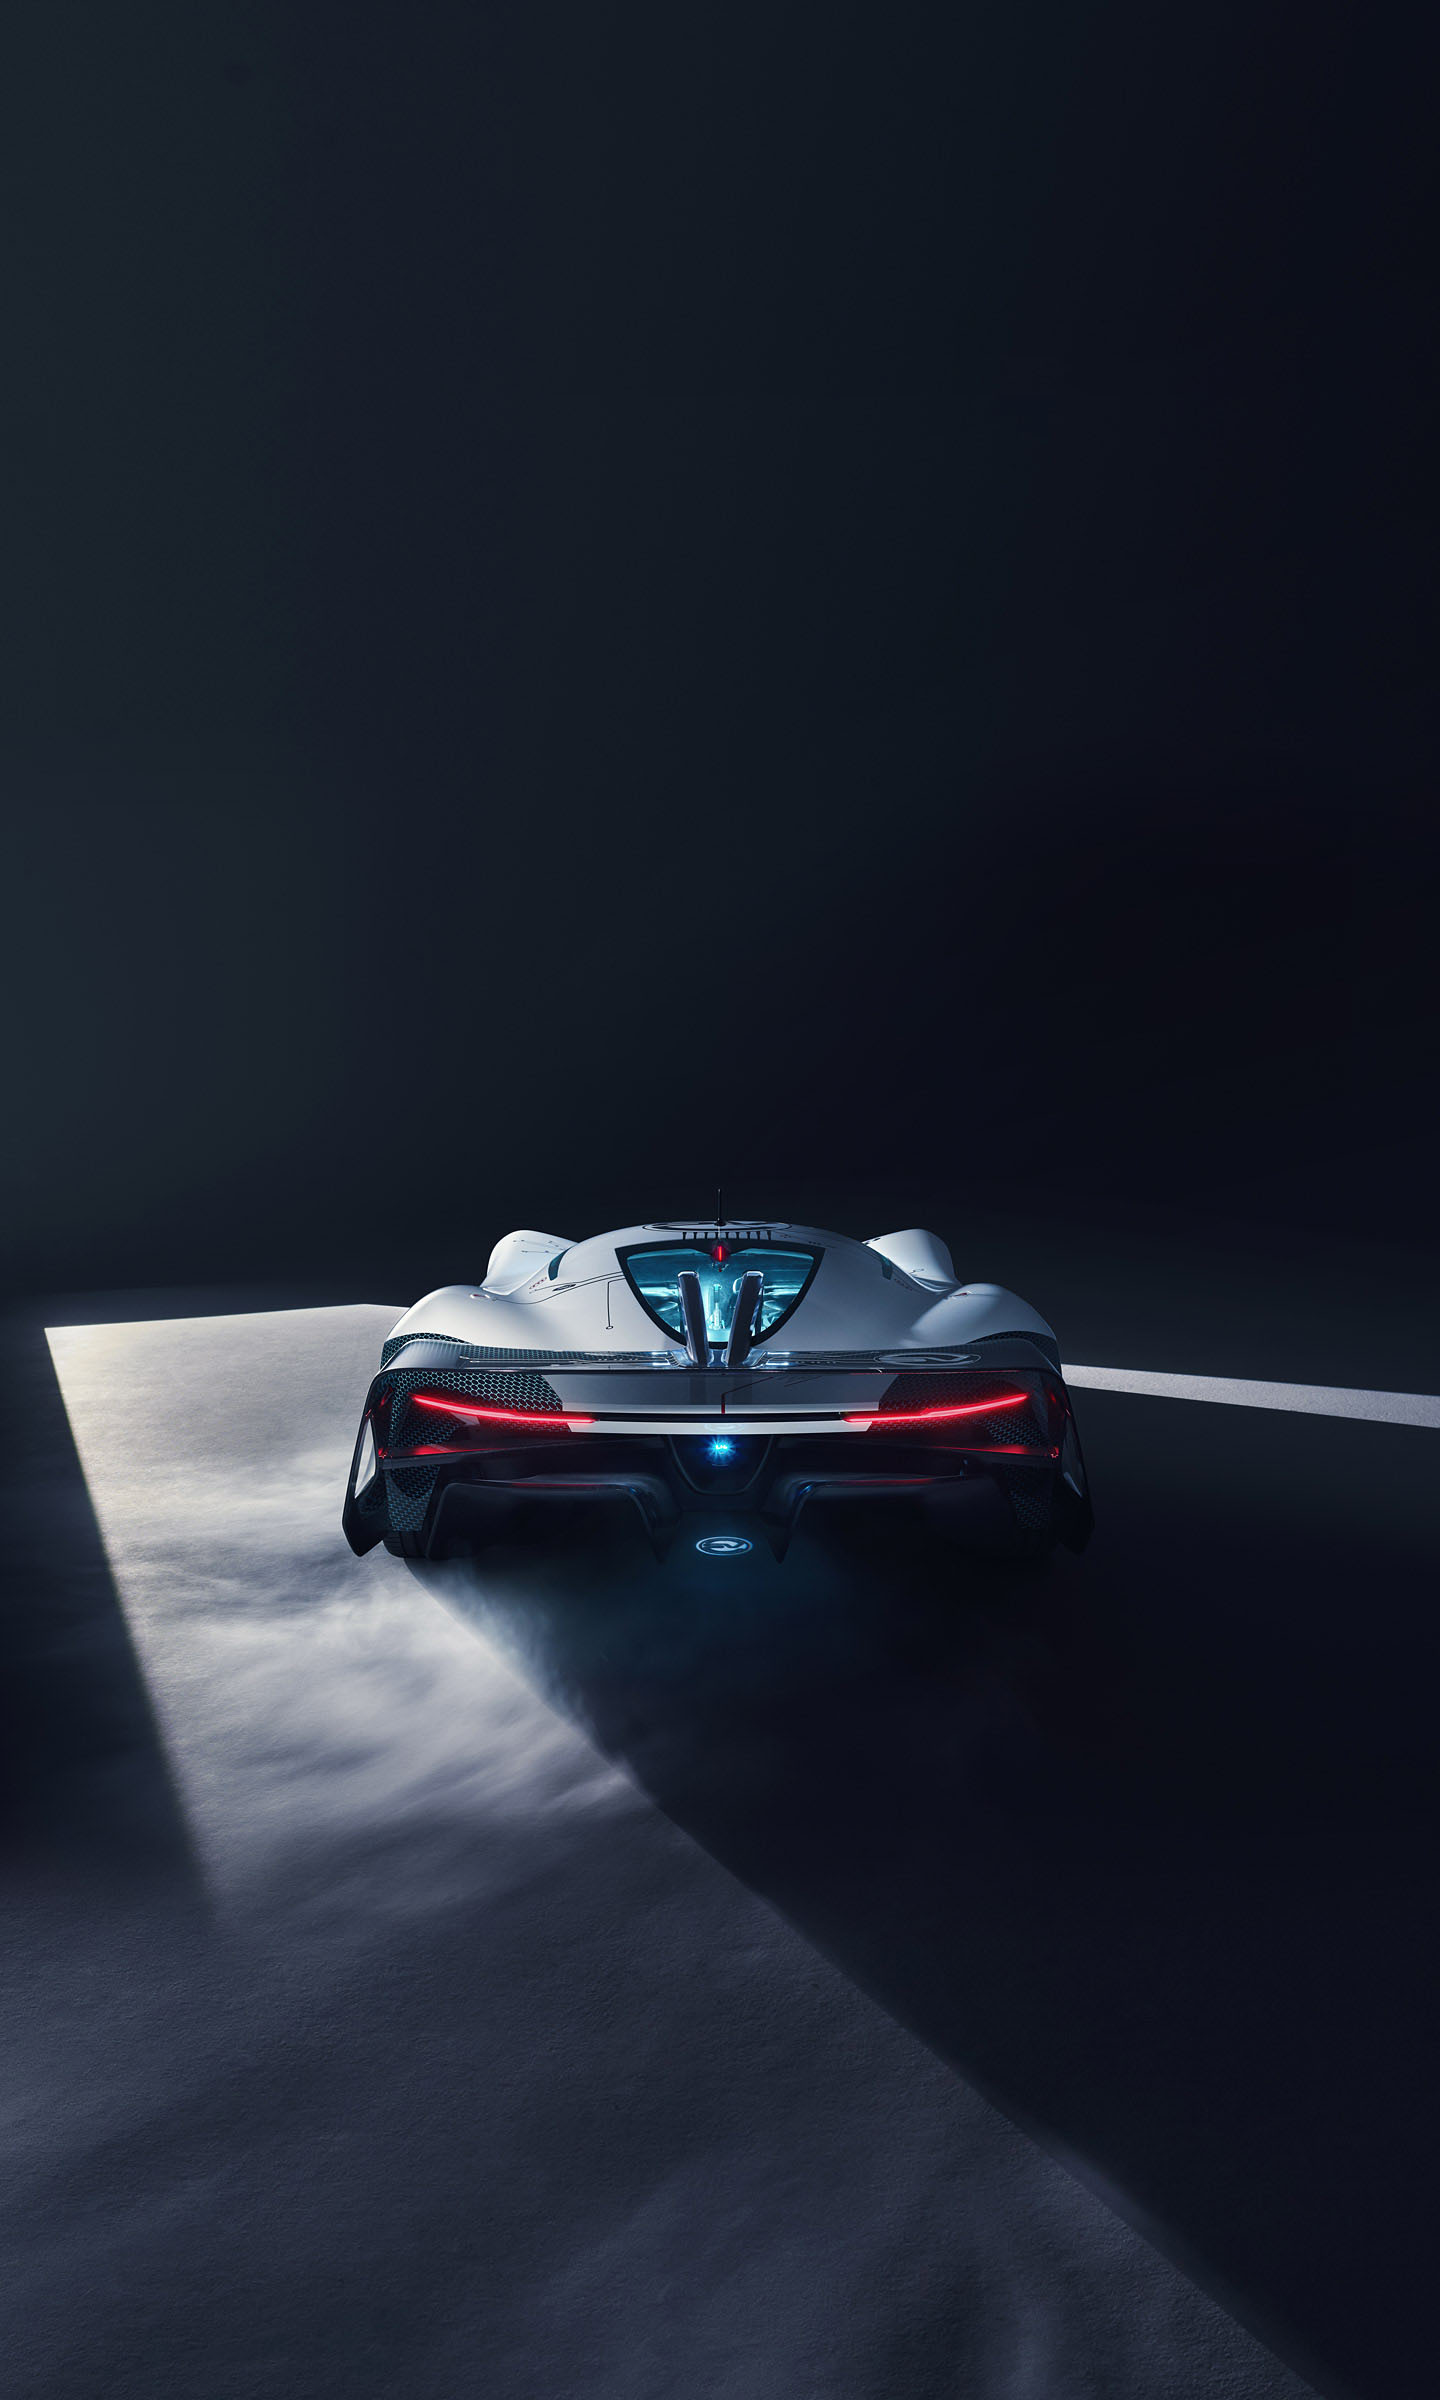  2020 Jaguar Vision Gran Turismo SV Concept Wallpaper.